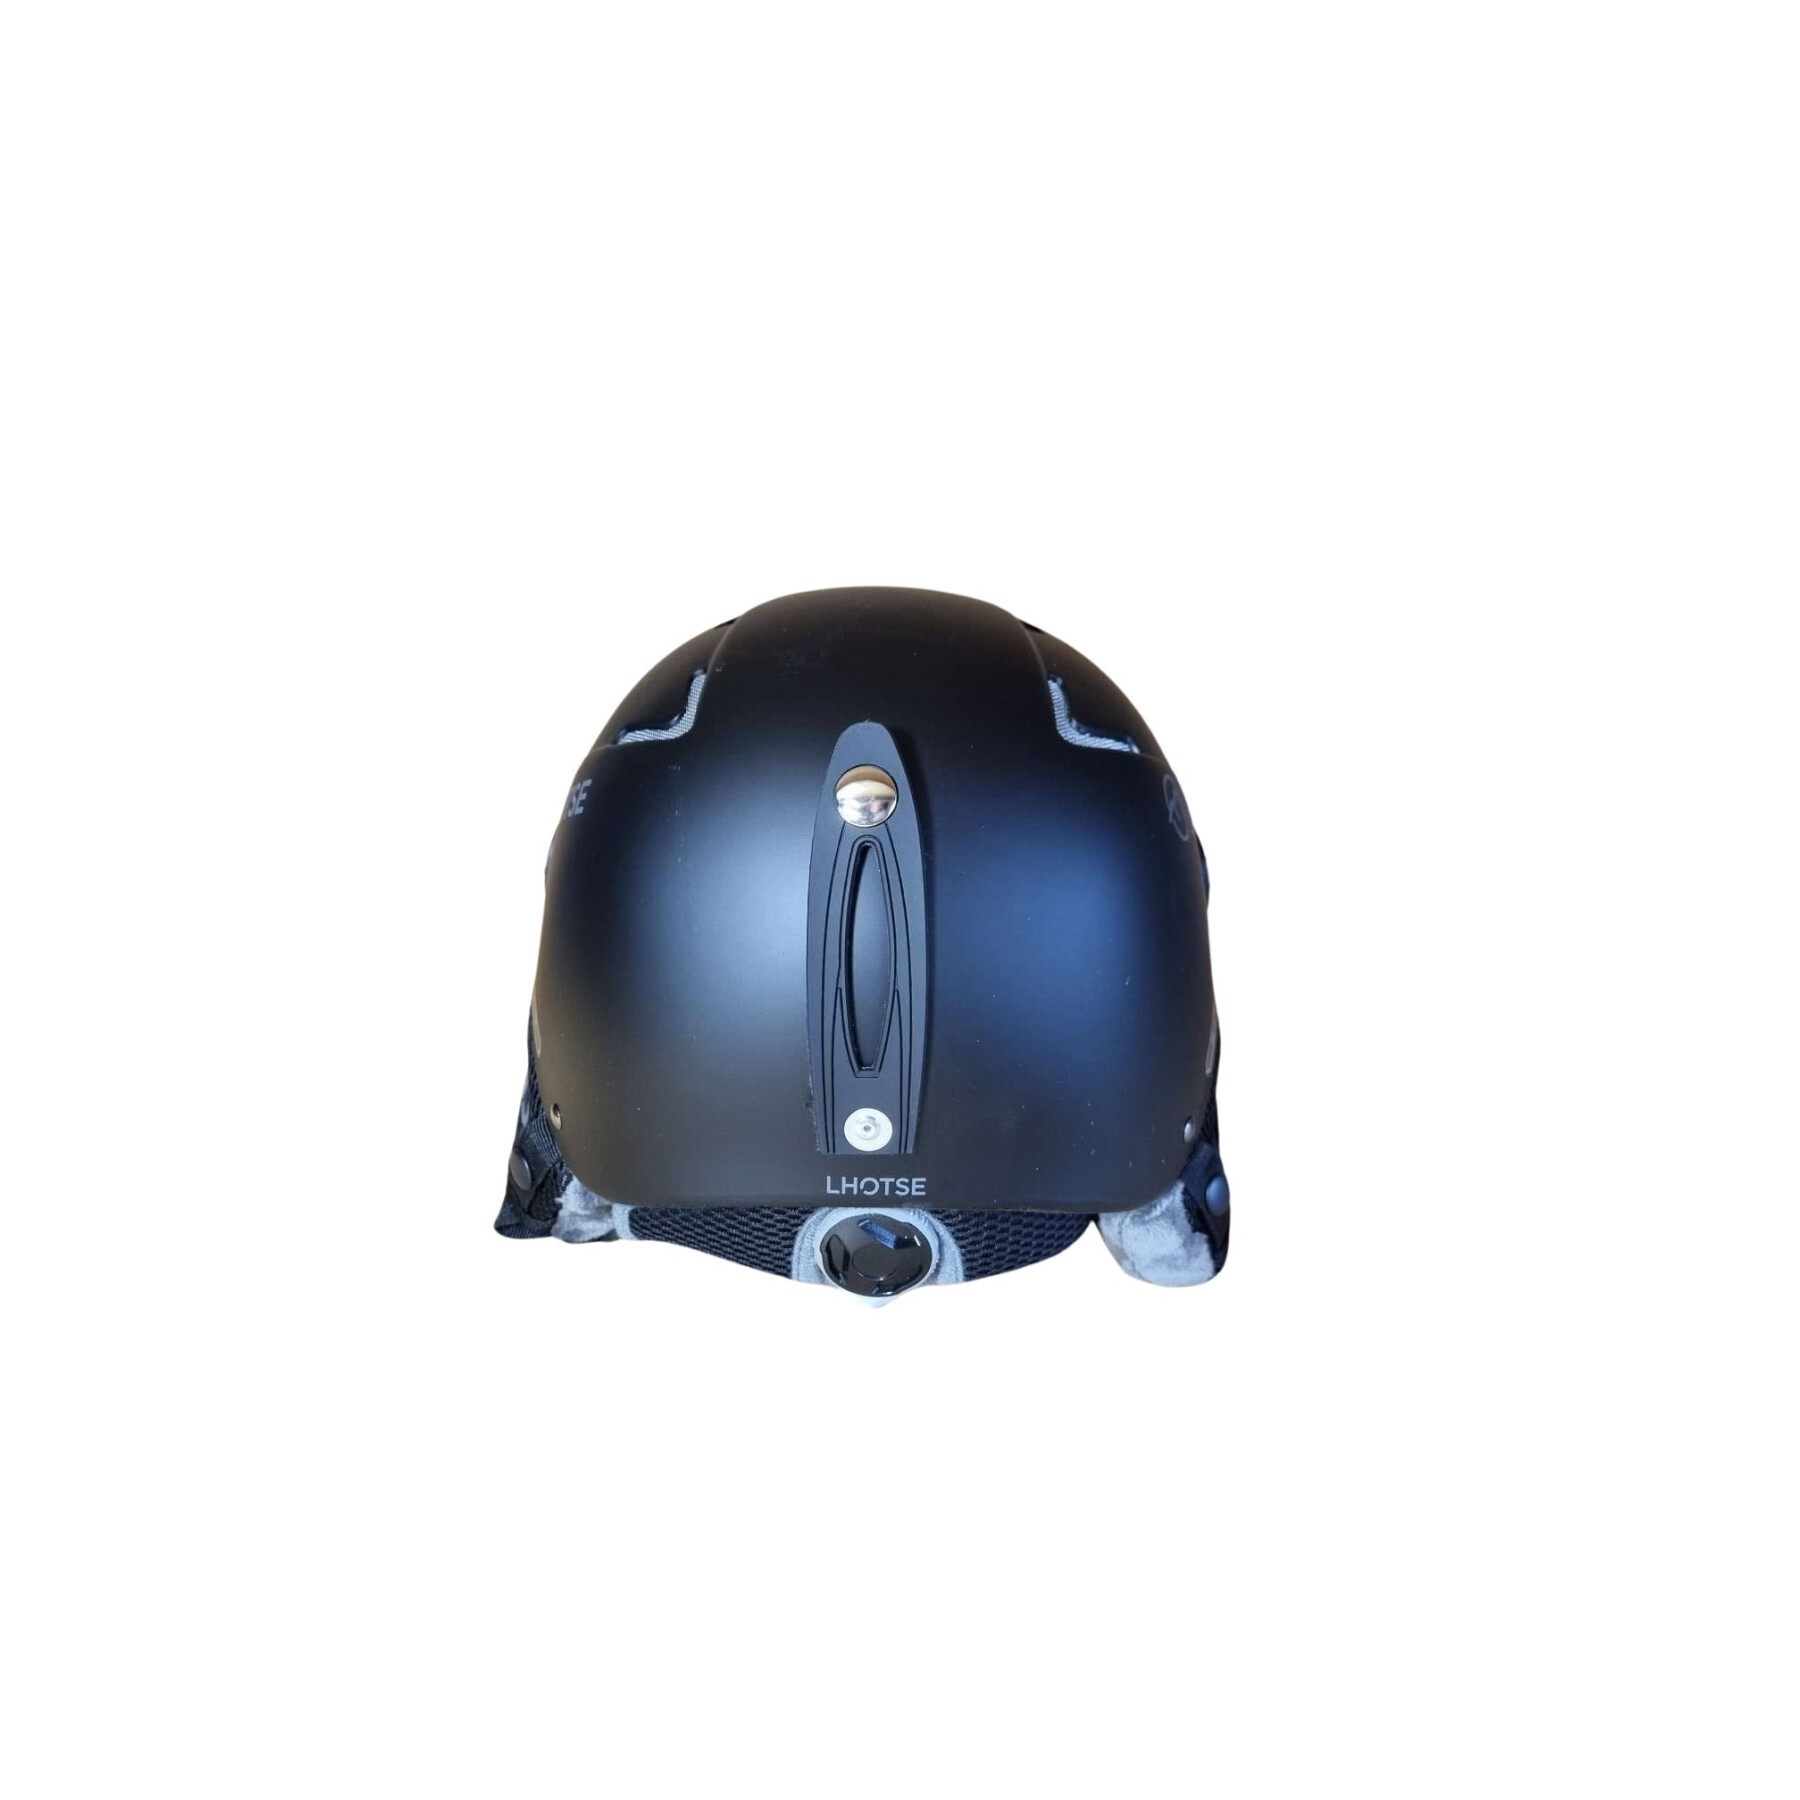 Casco de esquí Lhotse helmet with visor